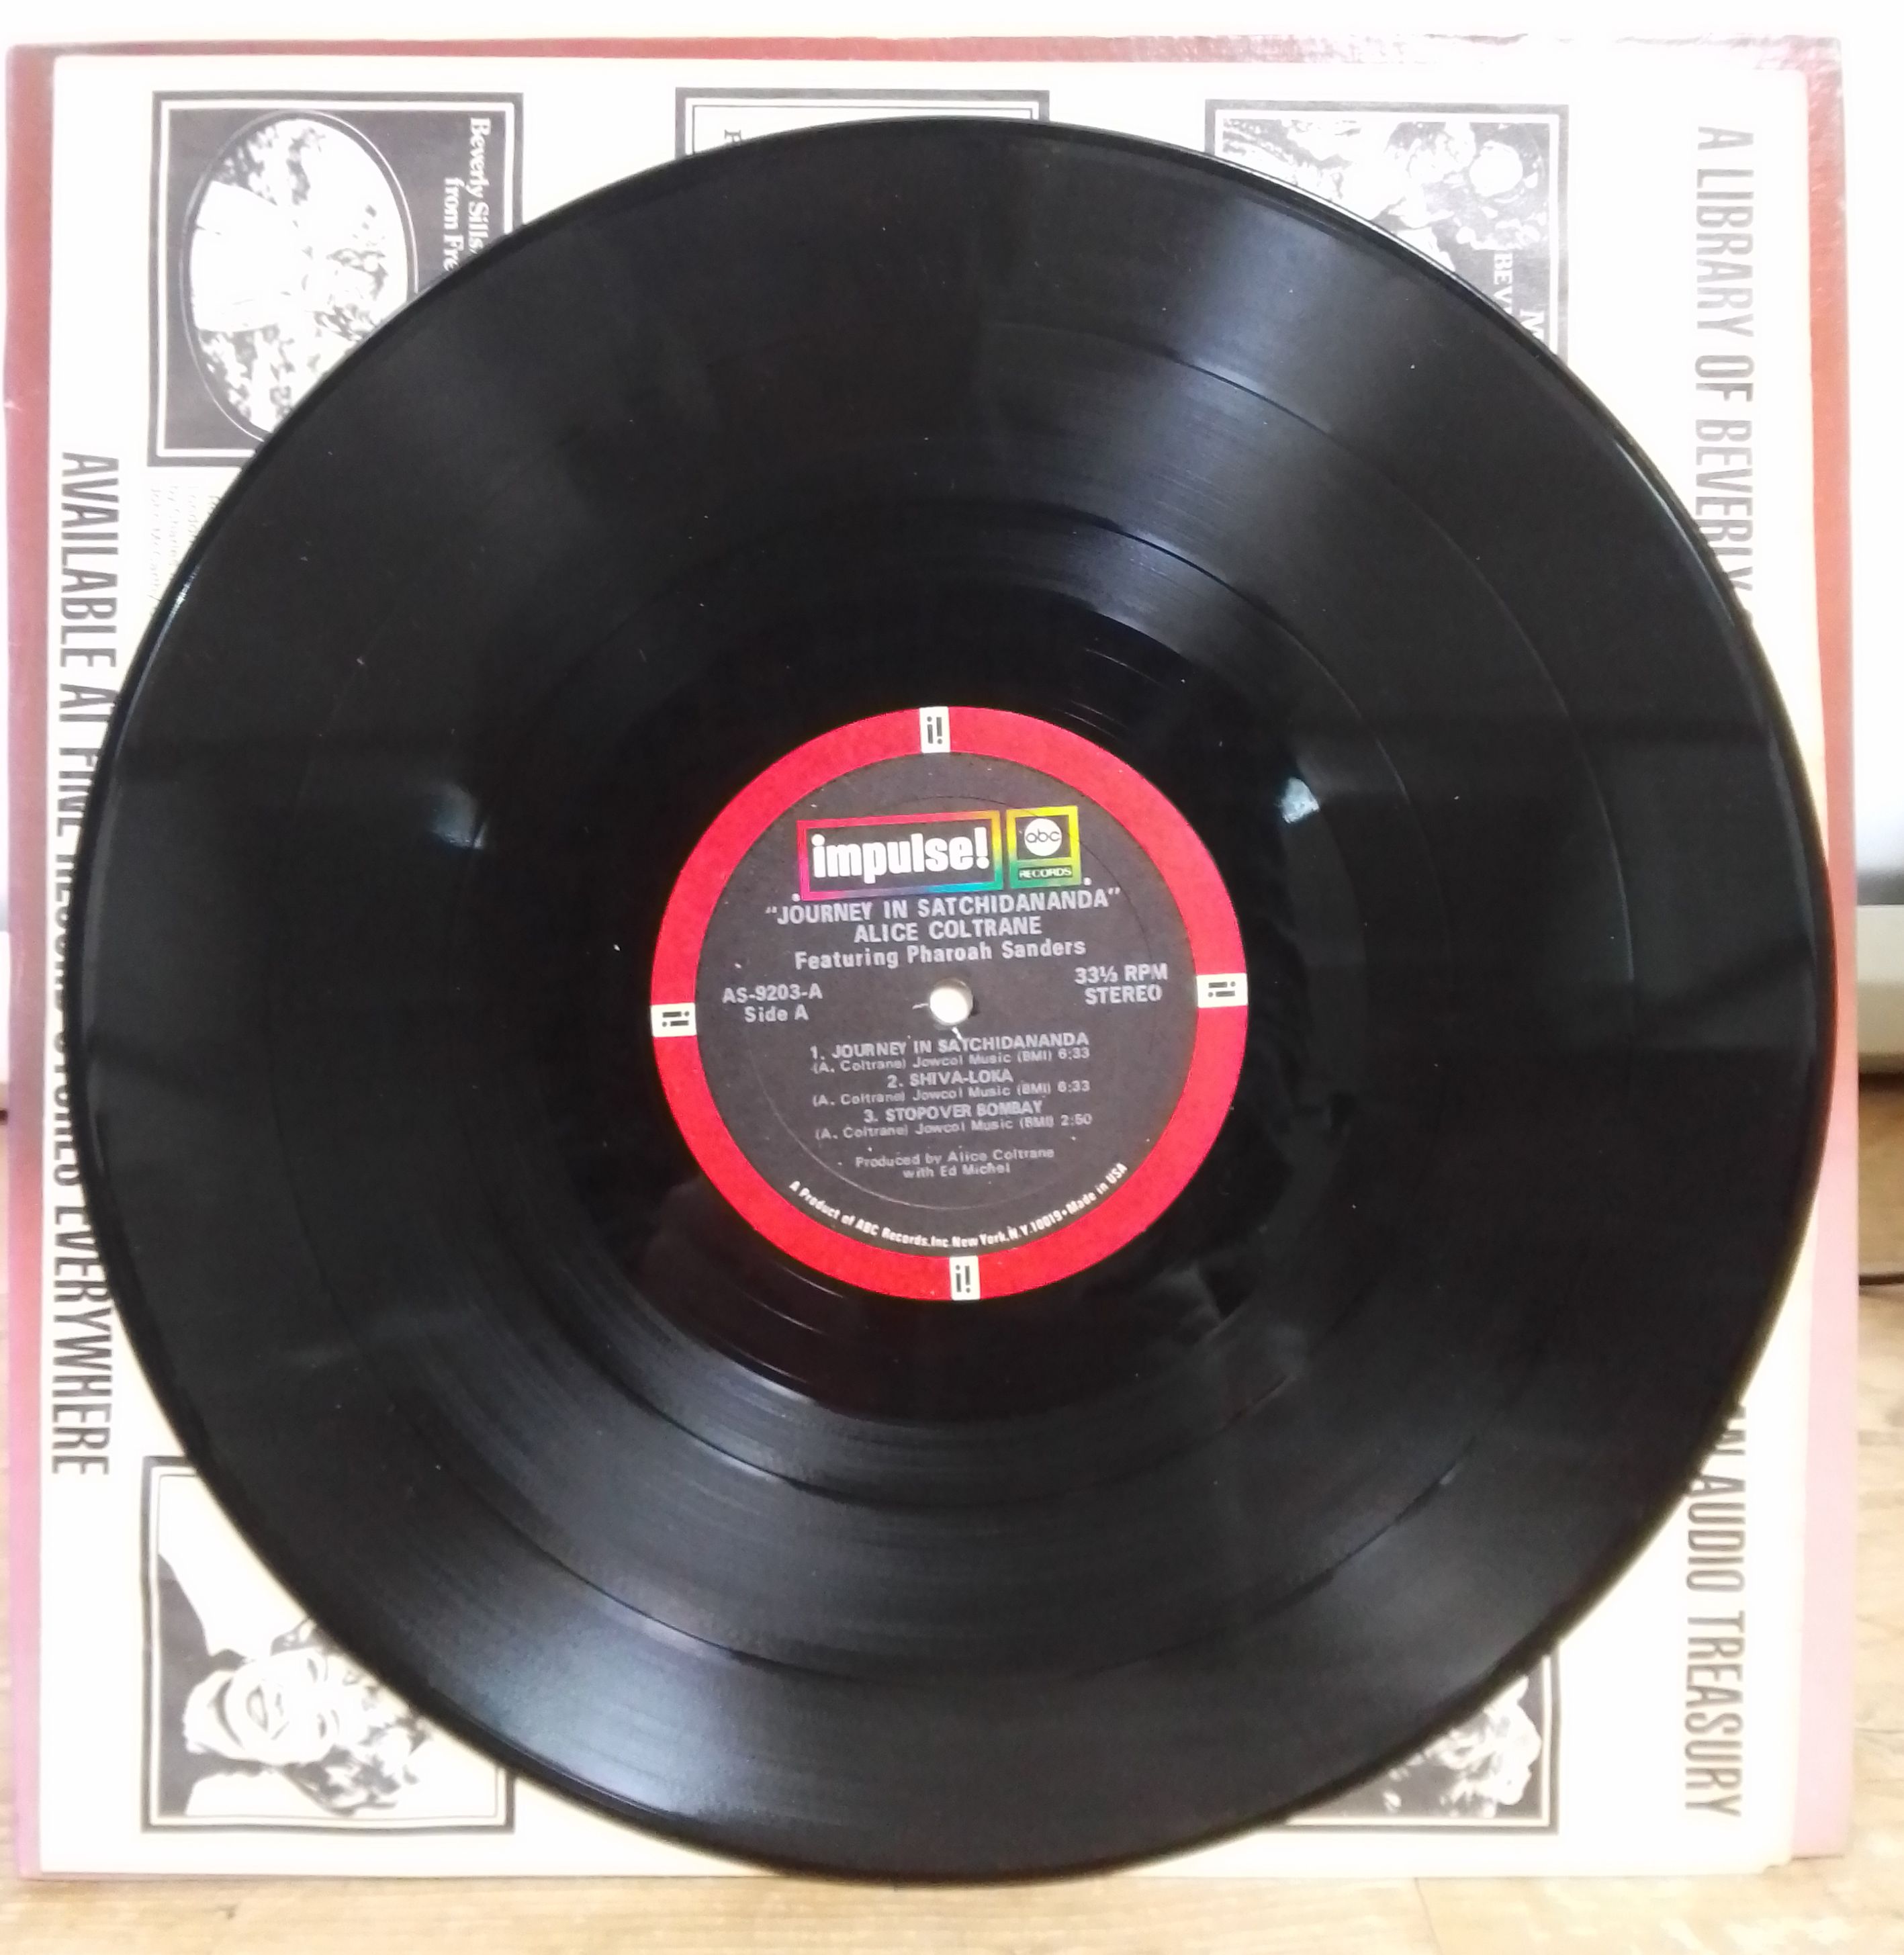 Alice Coltrane Featuring Pharoah Sanders - Journey In Satchidananda, gatefold stereo LP, 1st - Image 3 of 5